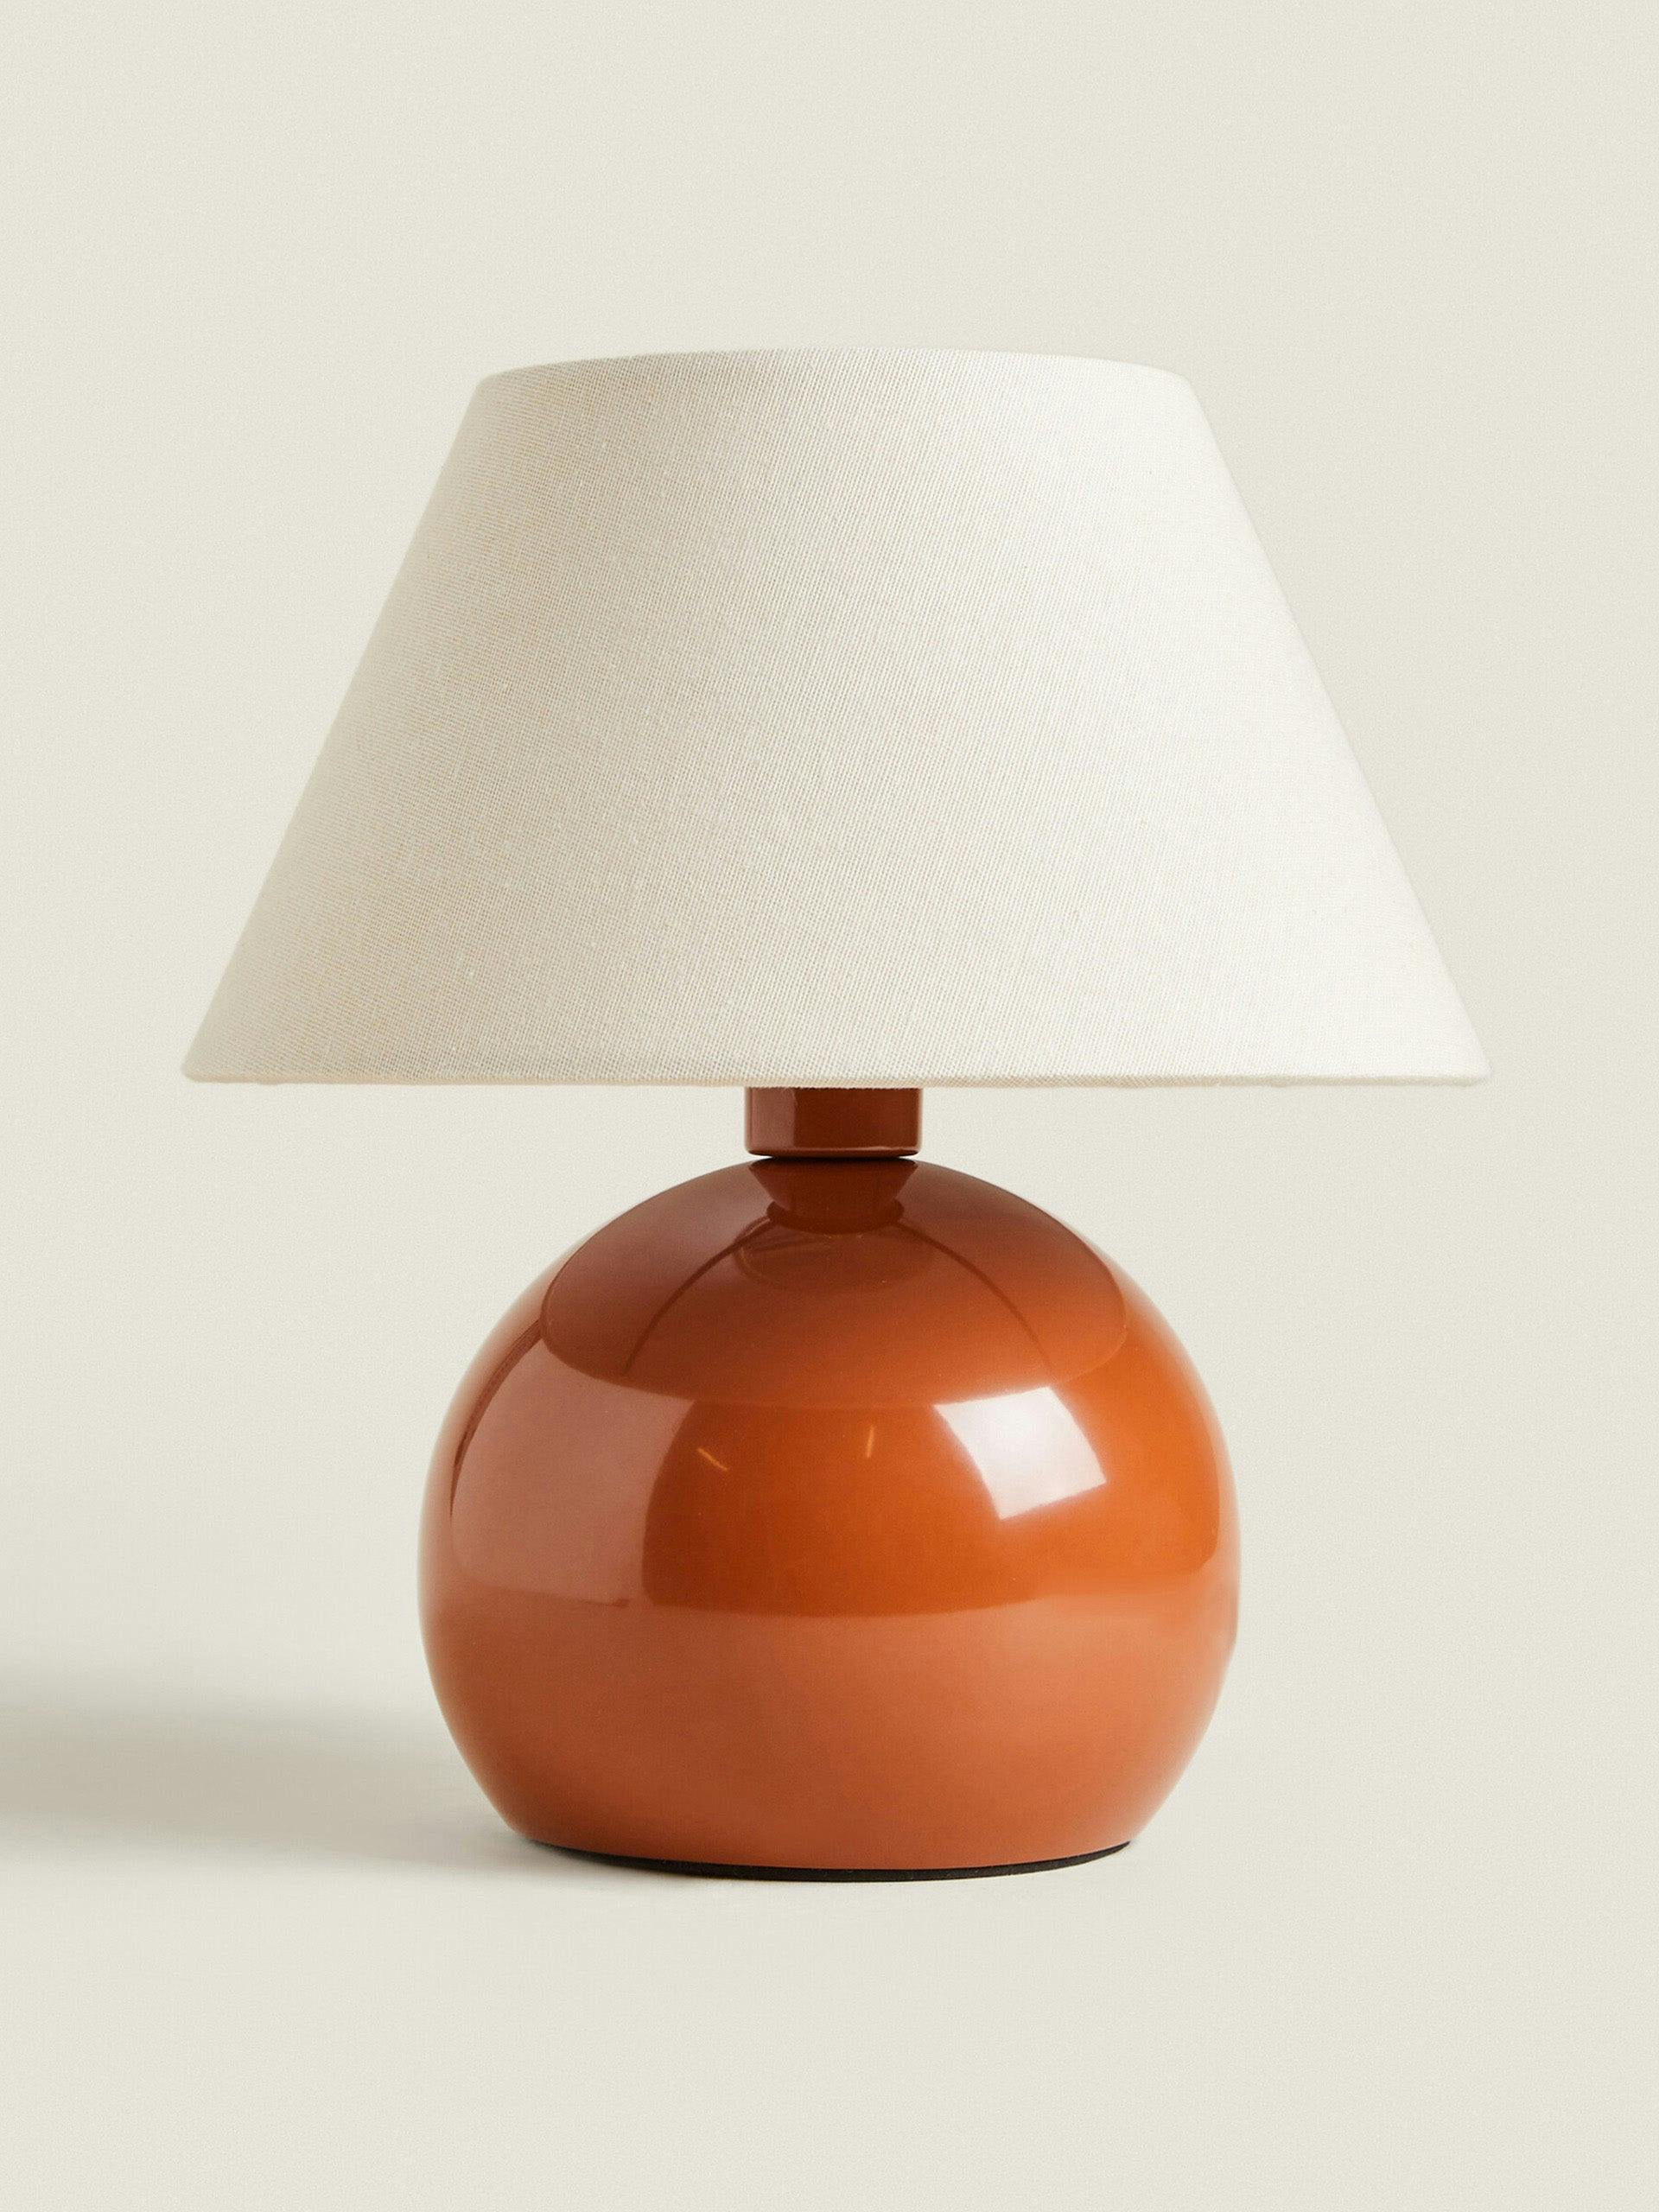 Lamp with reddish base